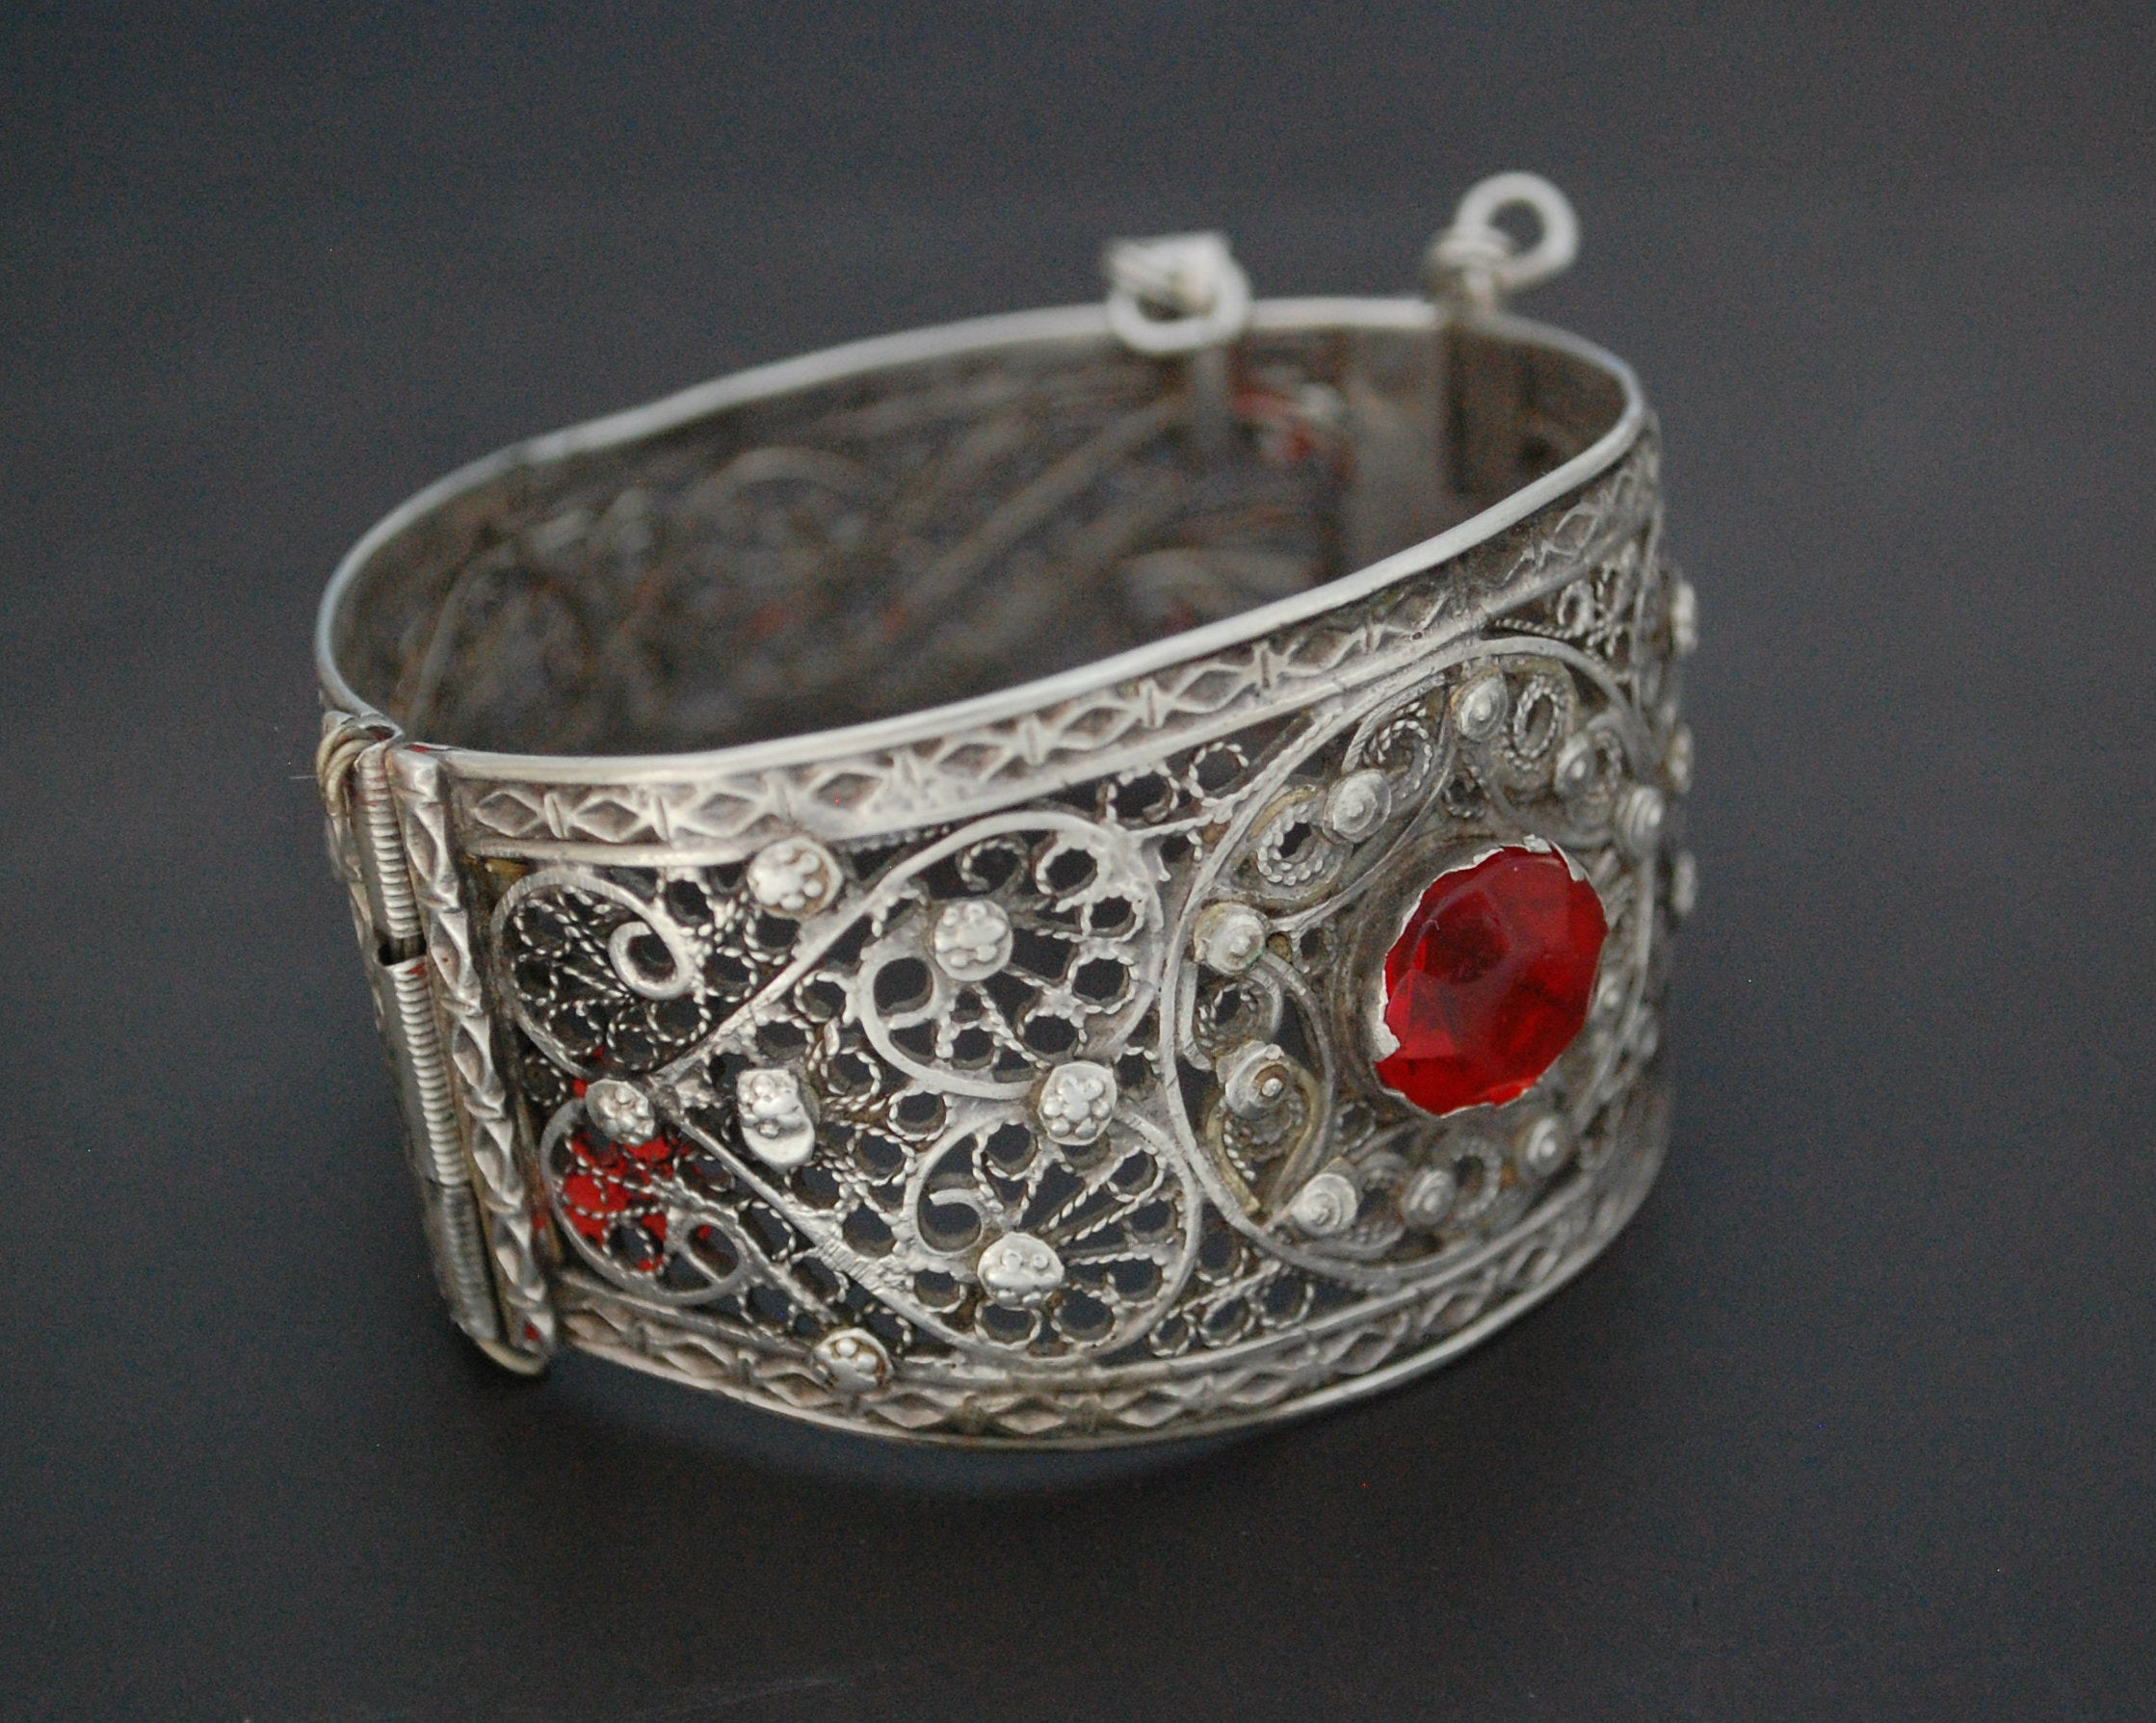 Afghani Filigree Bracelet with Red Glass